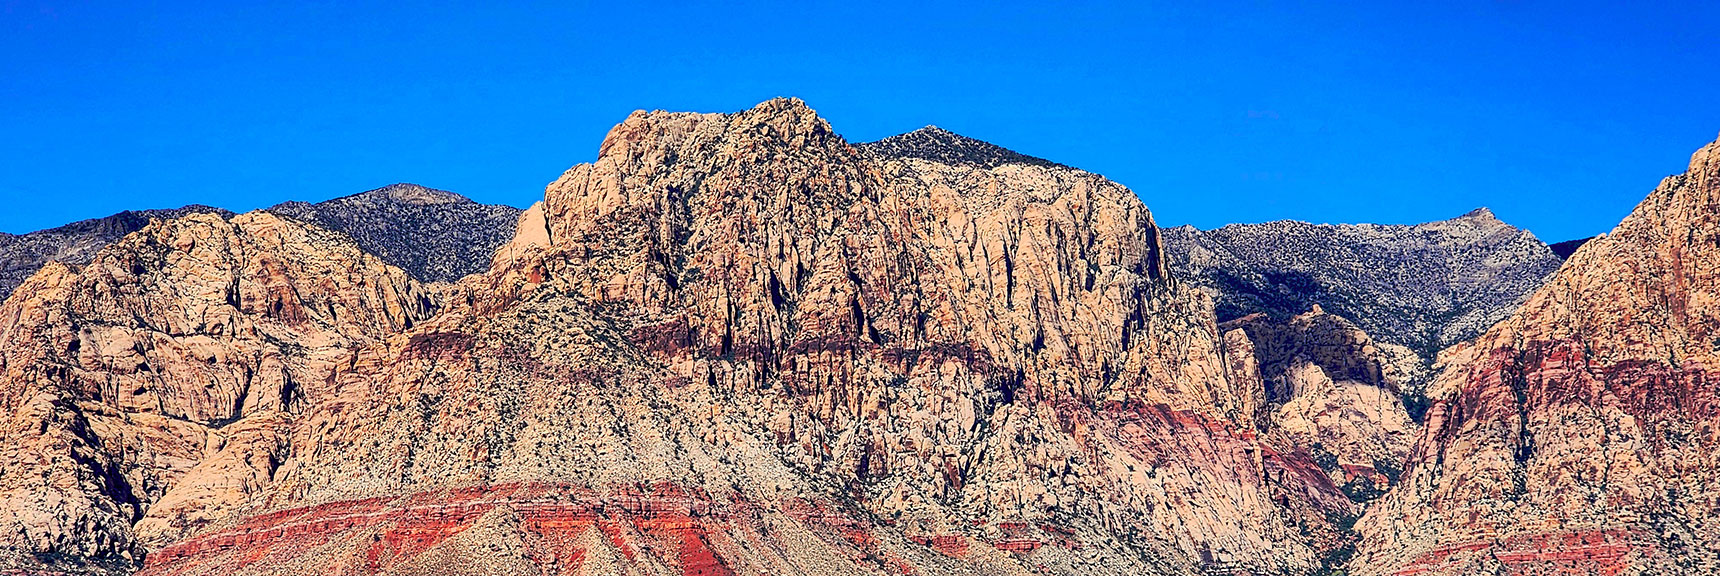 Indecision Peak | Western High Ridge | Blue Diamond Hill, Nevada